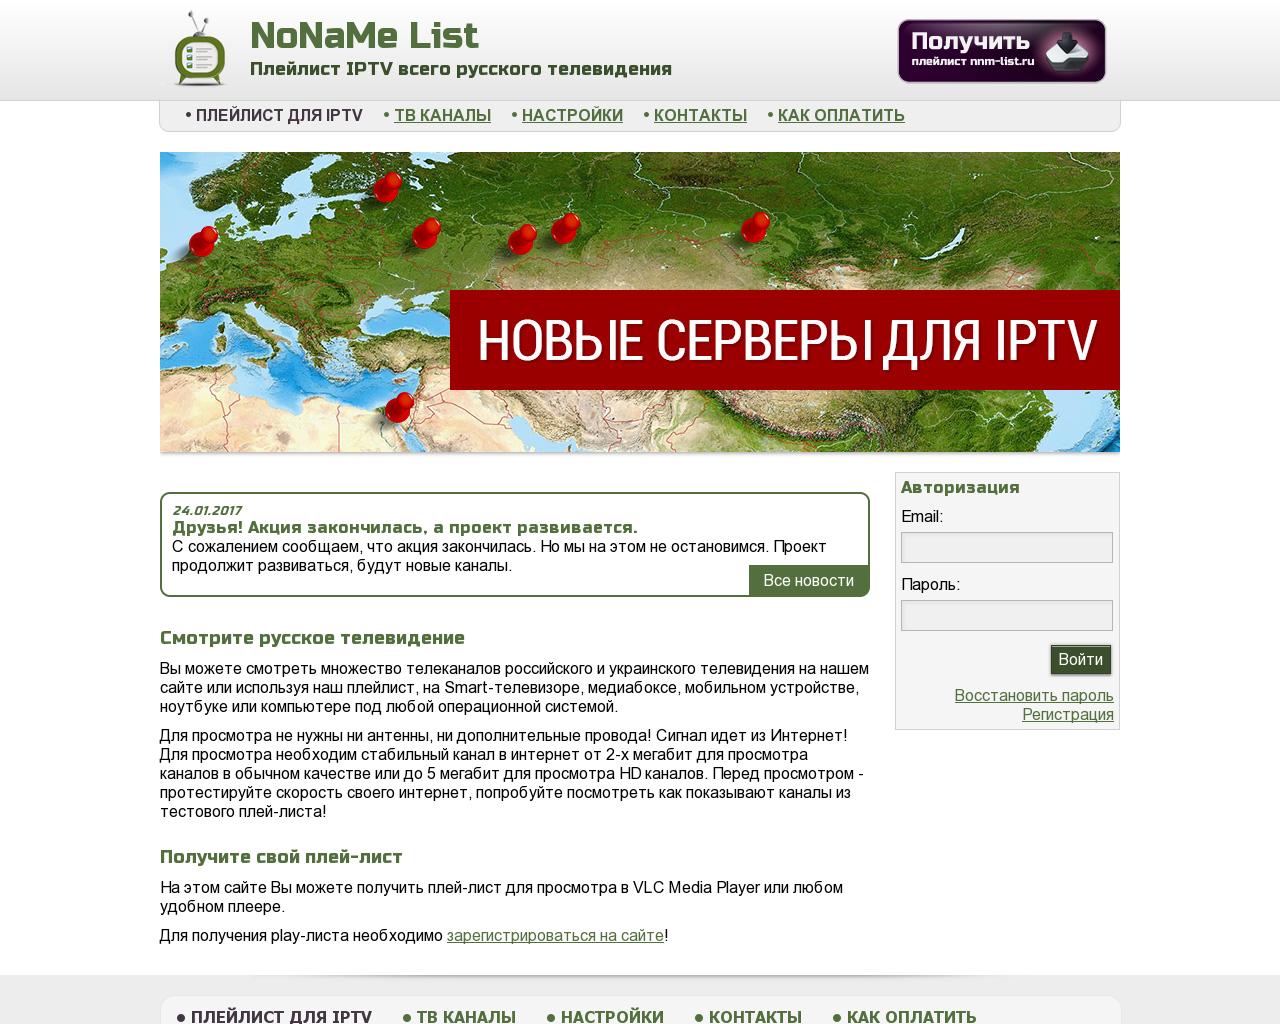 Изображение сайта nnm-list.ru в разрешении 1280x1024